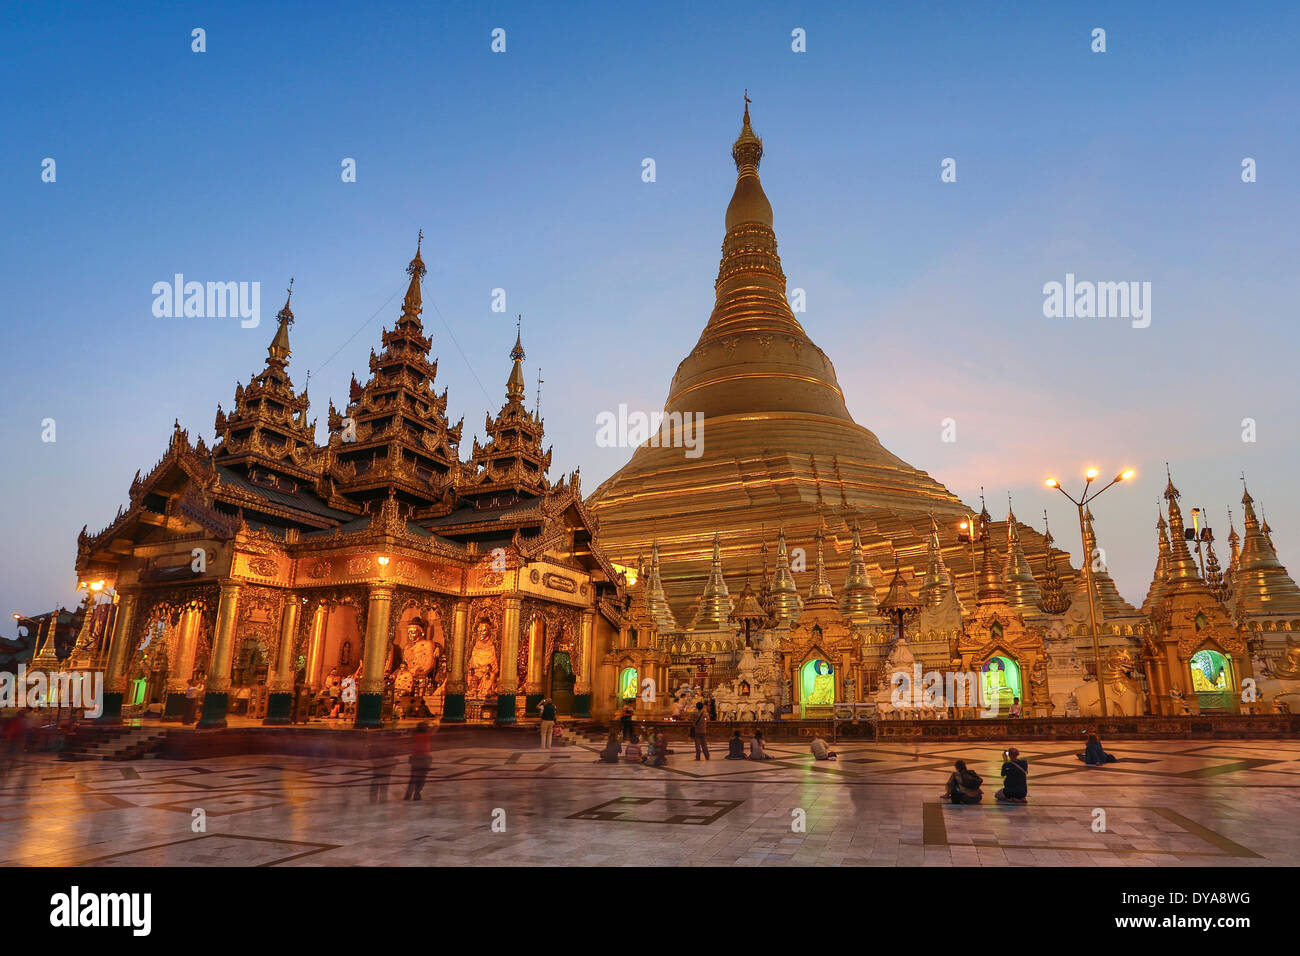 Asia Birmania Myanmar Yangon Shwedagon Rangoon arquitectura colorida pagoda Buda Budismo limpio horizonte golden religión vísperas Foto de stock